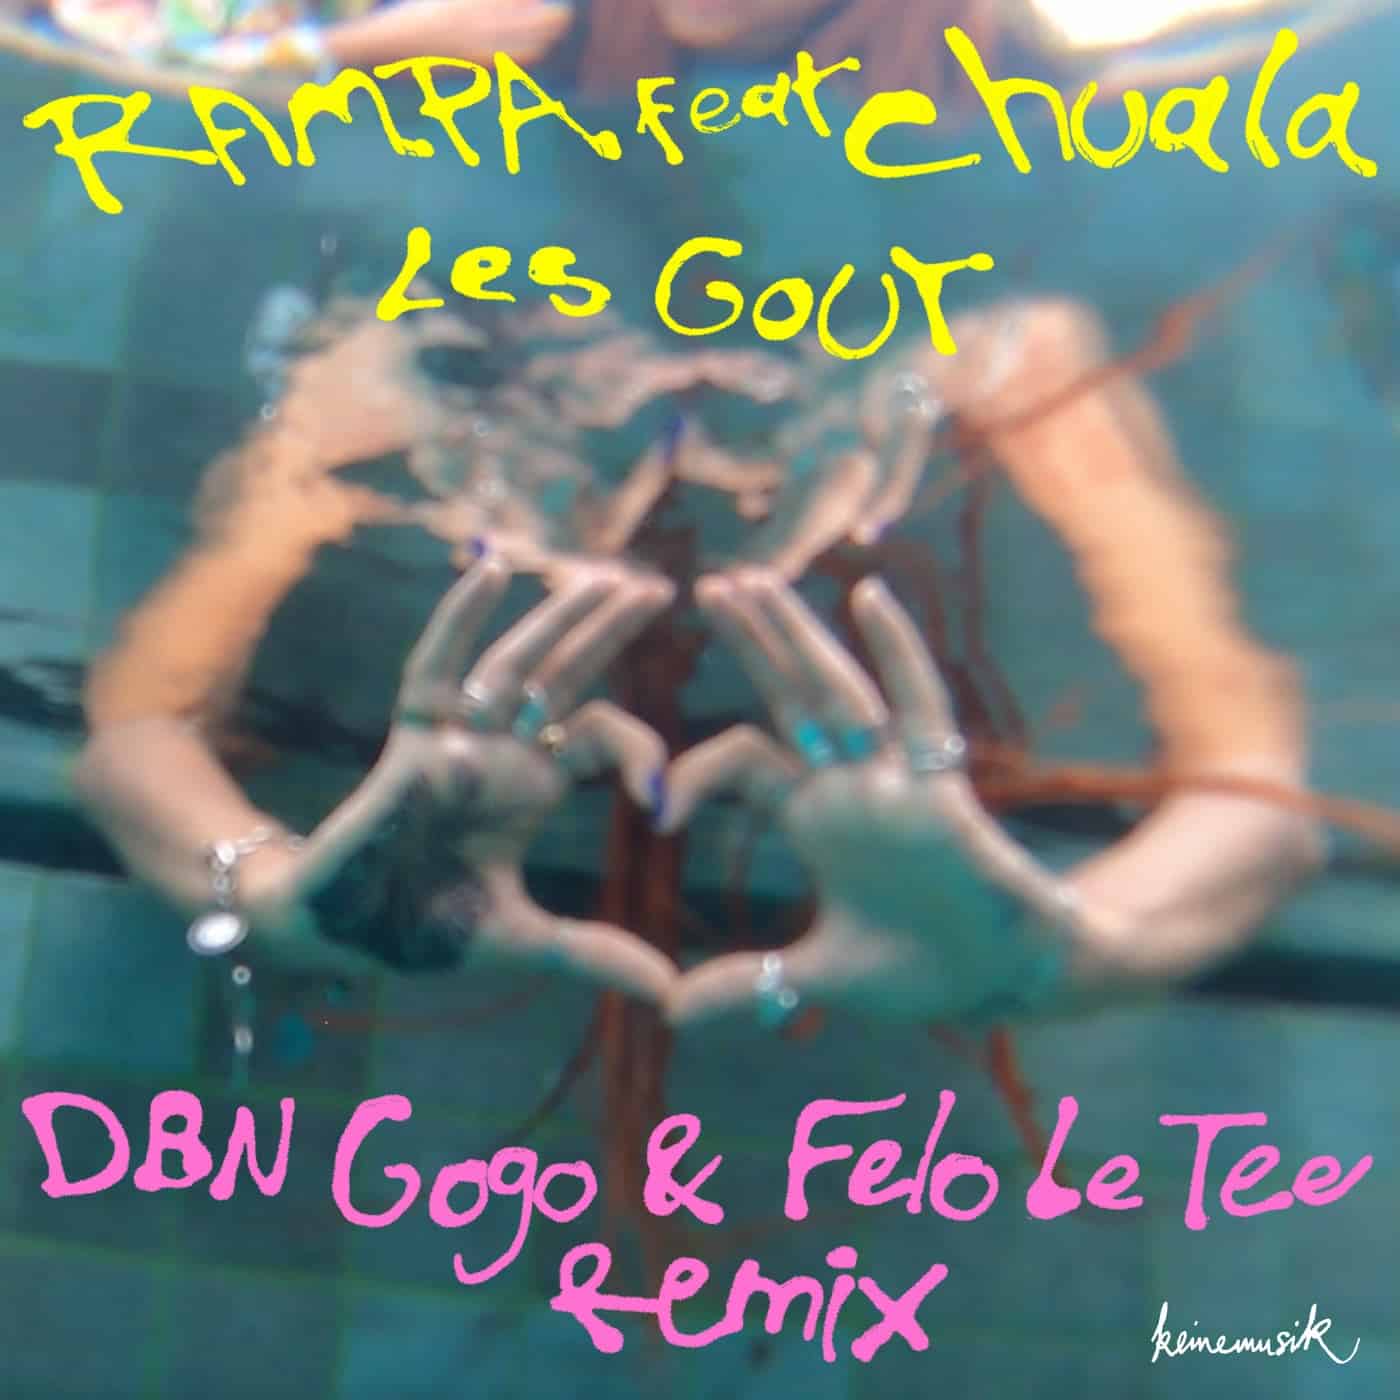 image cover: Rampa, chuala - Les Gout (DBN Gogo & Felo Le Tee Remix) / KM062S2